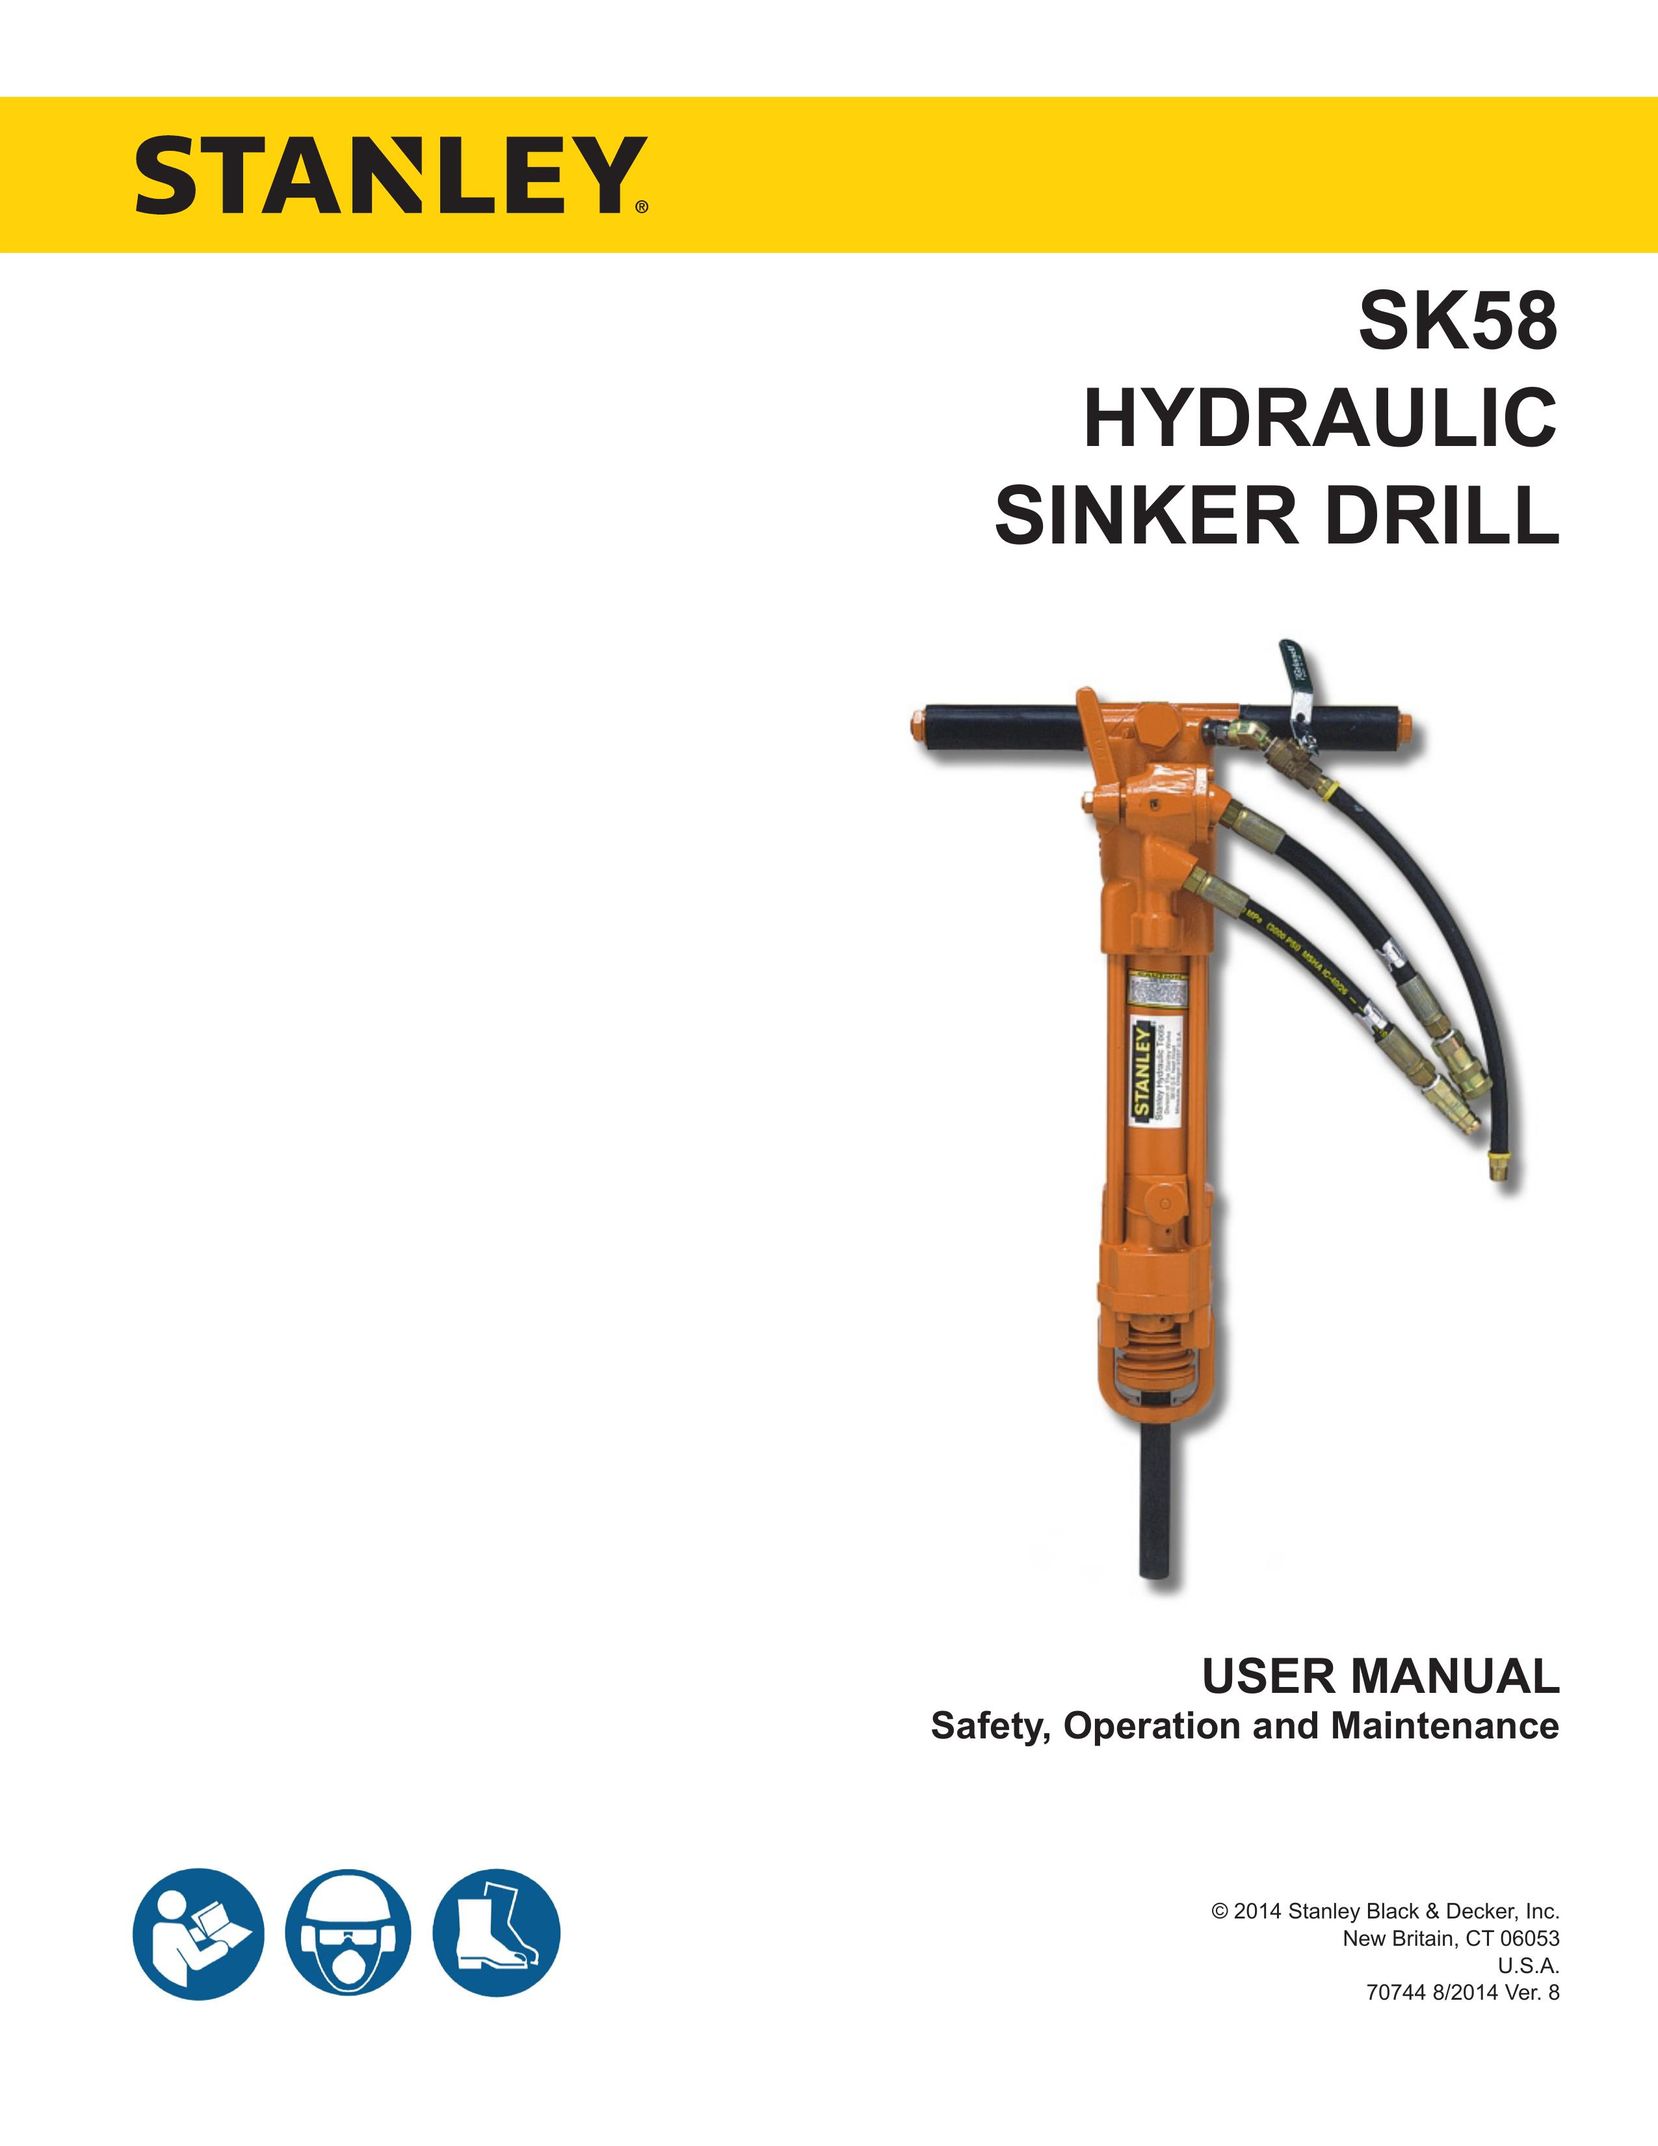 Stanley Black & Decker SK58 Power Hammer User Manual